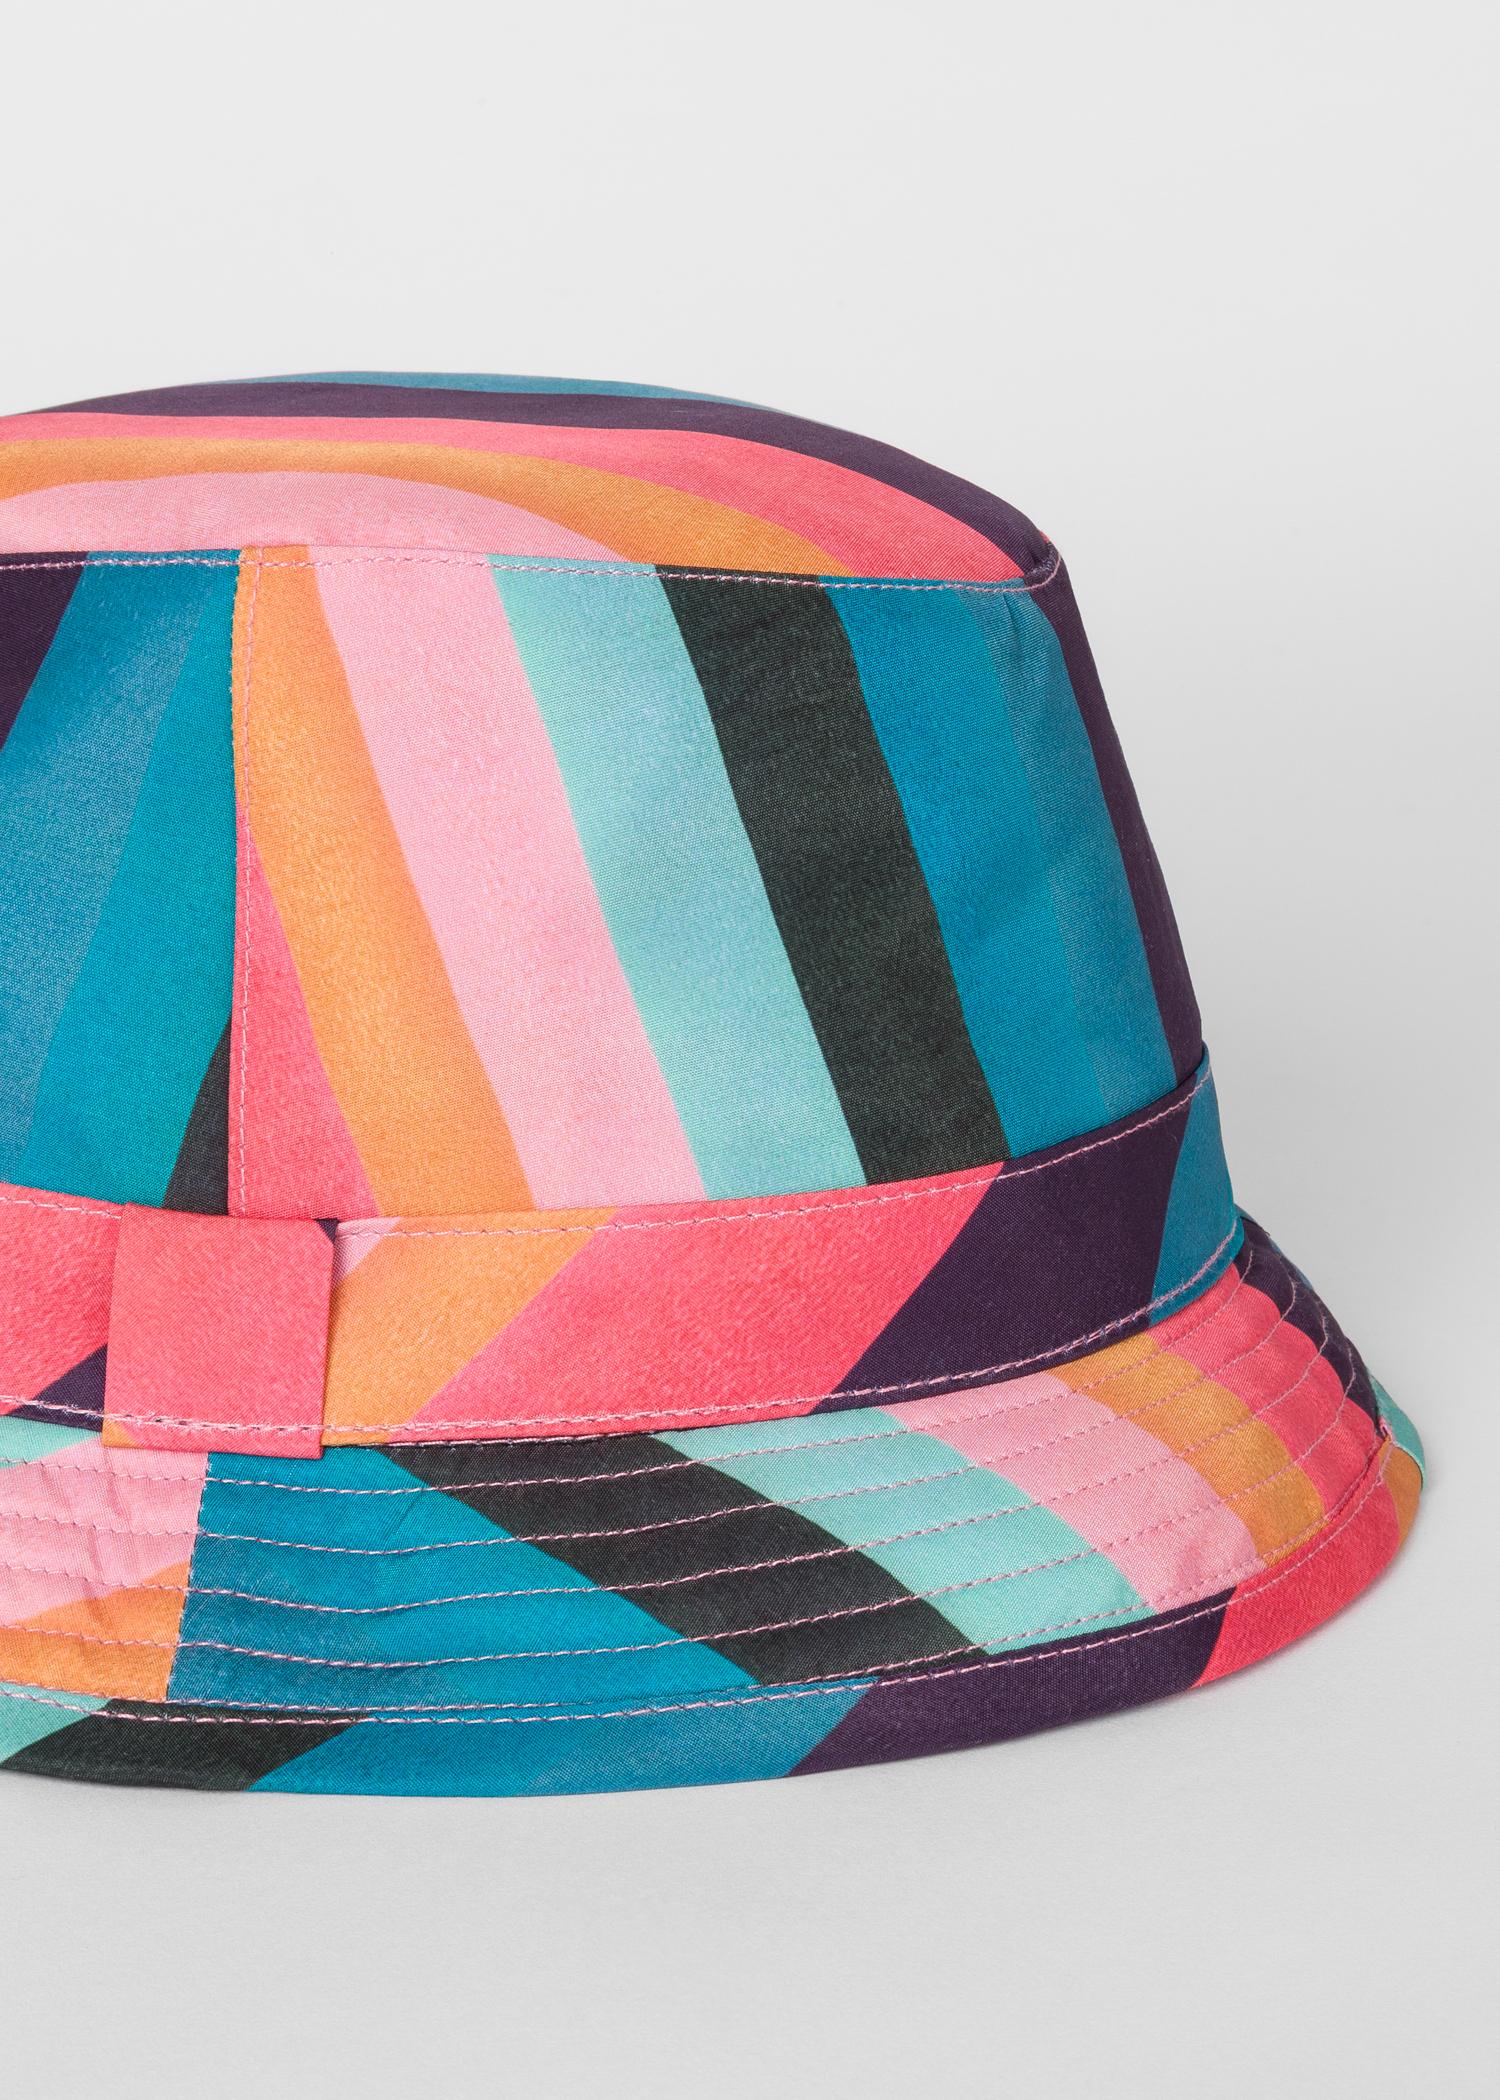 Paul Smith Synthetic 'artist Stripe' Print Bucket Hat for Men - Lyst